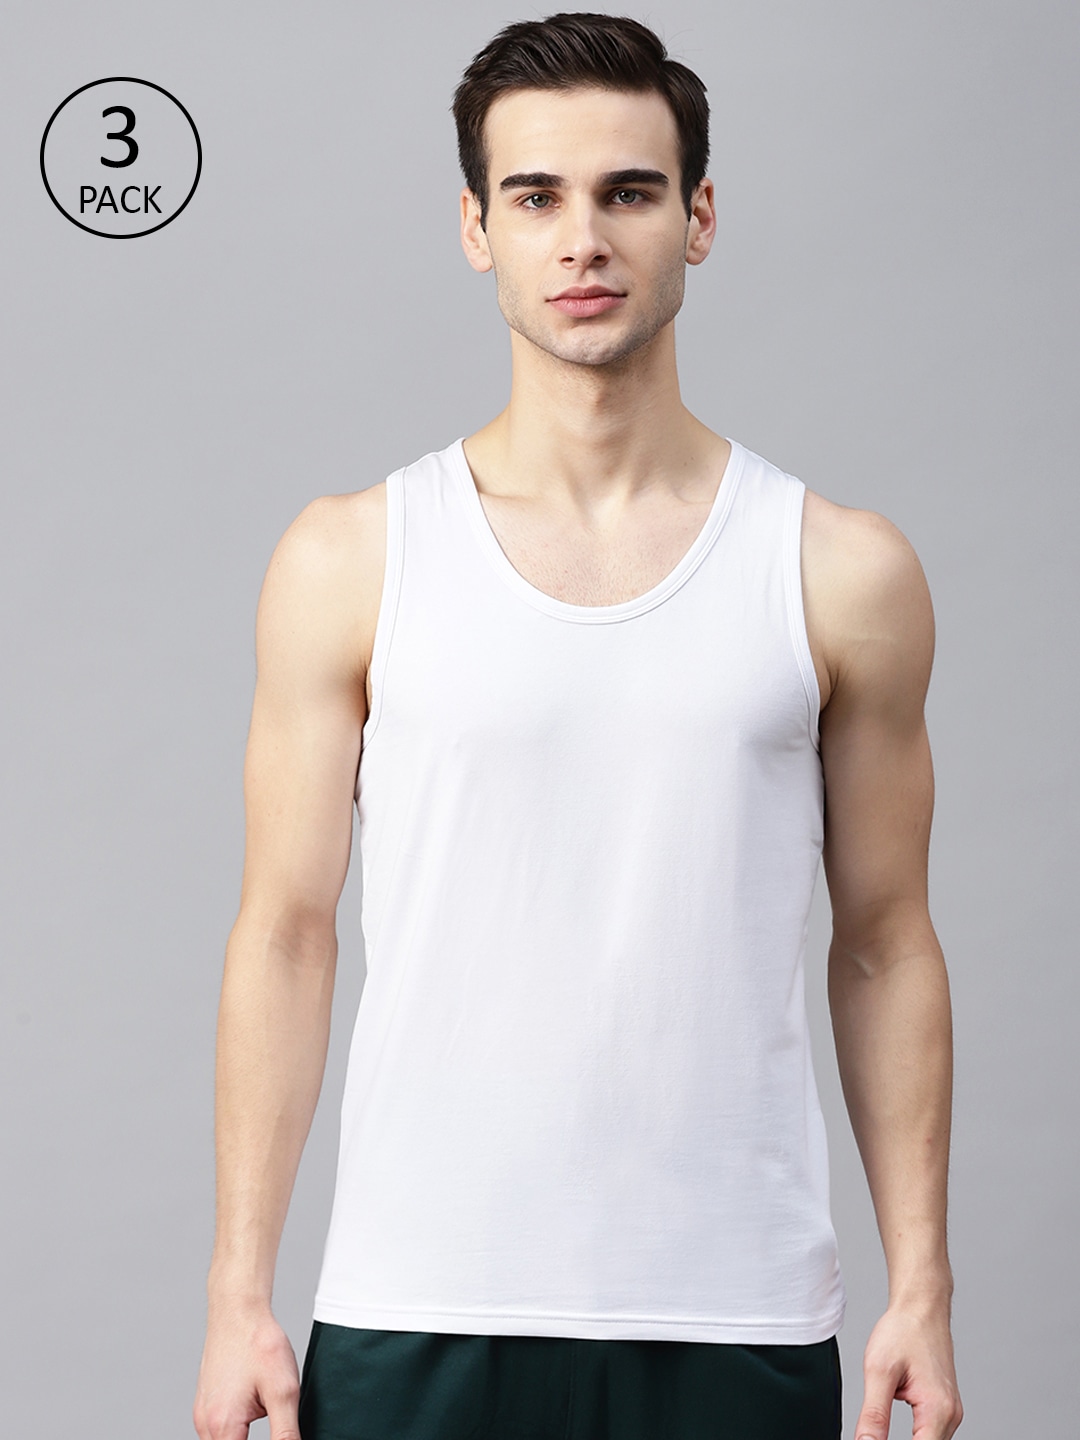 Clothing Innerwear Vests | Marks & Spencer Men Pack of 3 White Solid Innerwear Vests - GS17398